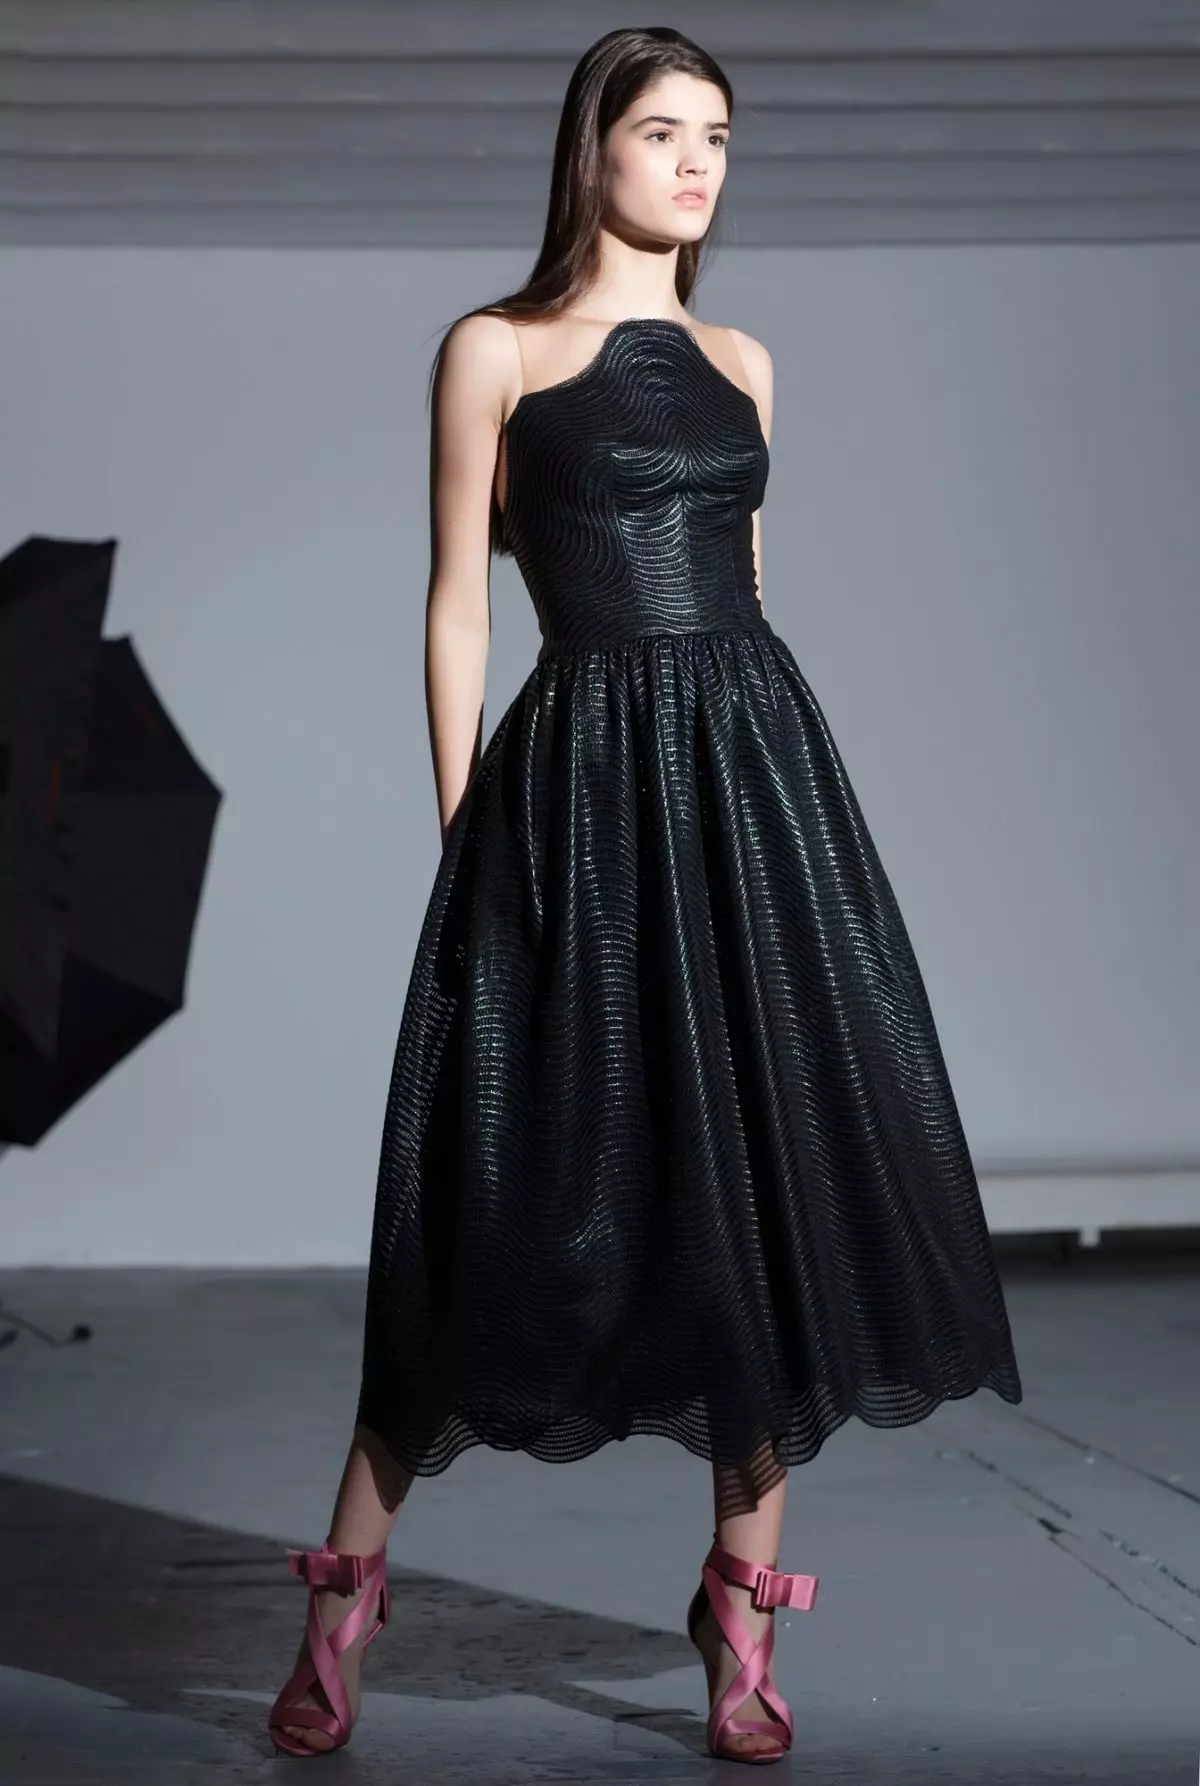 Sandalie zuwa Black Dress